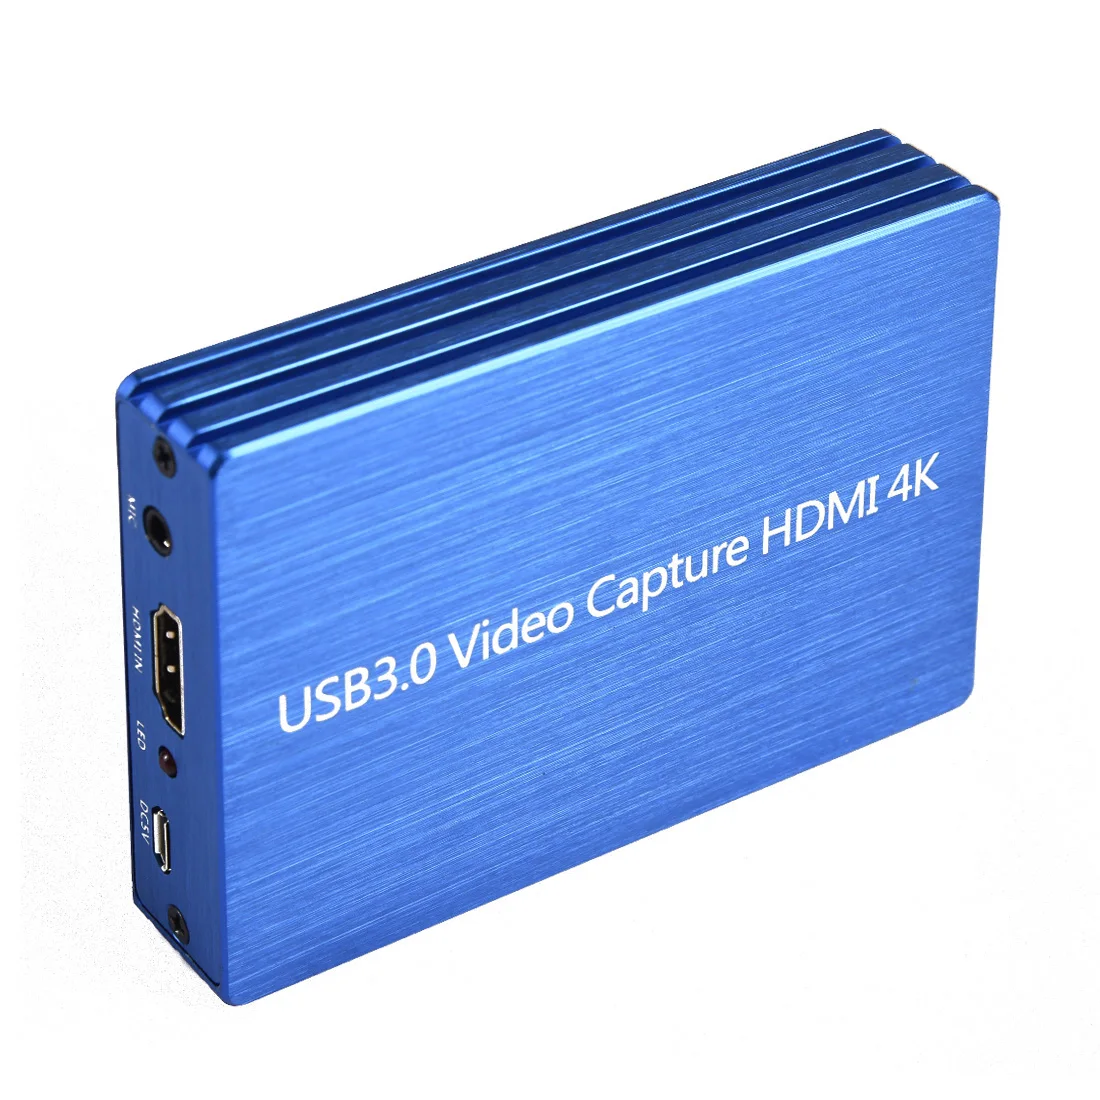 Kartica snimanje 4K HDMI USB 3.0 Adapter Memorijske kartice za snimanje videa Ključ 1080P 60 fps HD Video Računalne Komponente i oprema